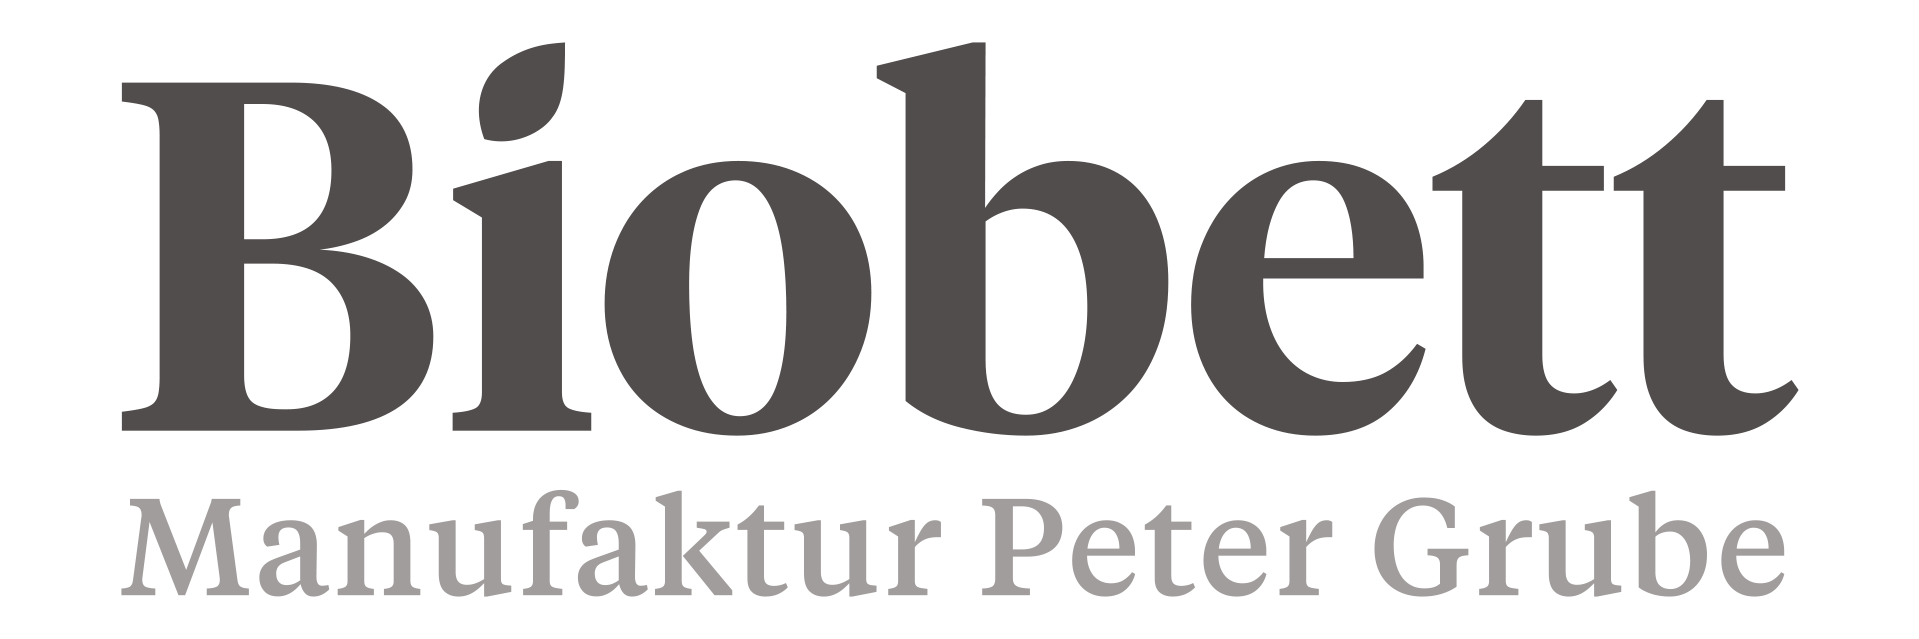 Biobett Manufaktur Peter Grube GmbH